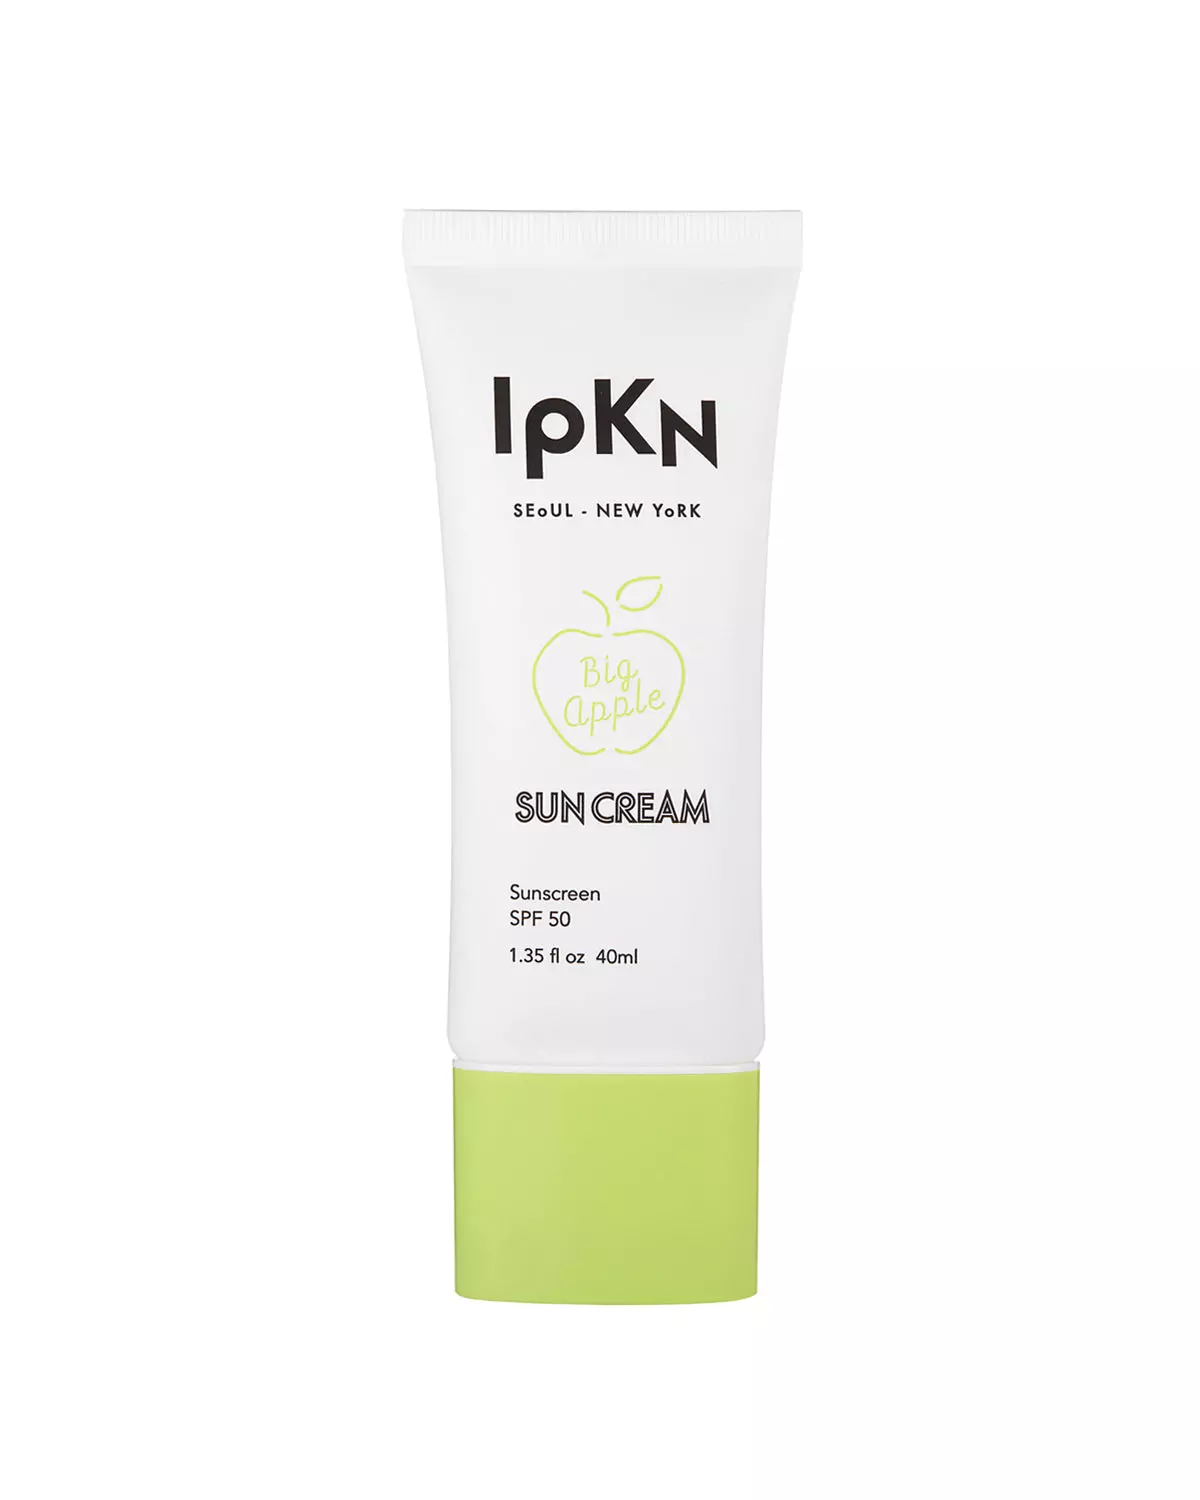 IPKN Big Apple Sun Cream, SPF 50 